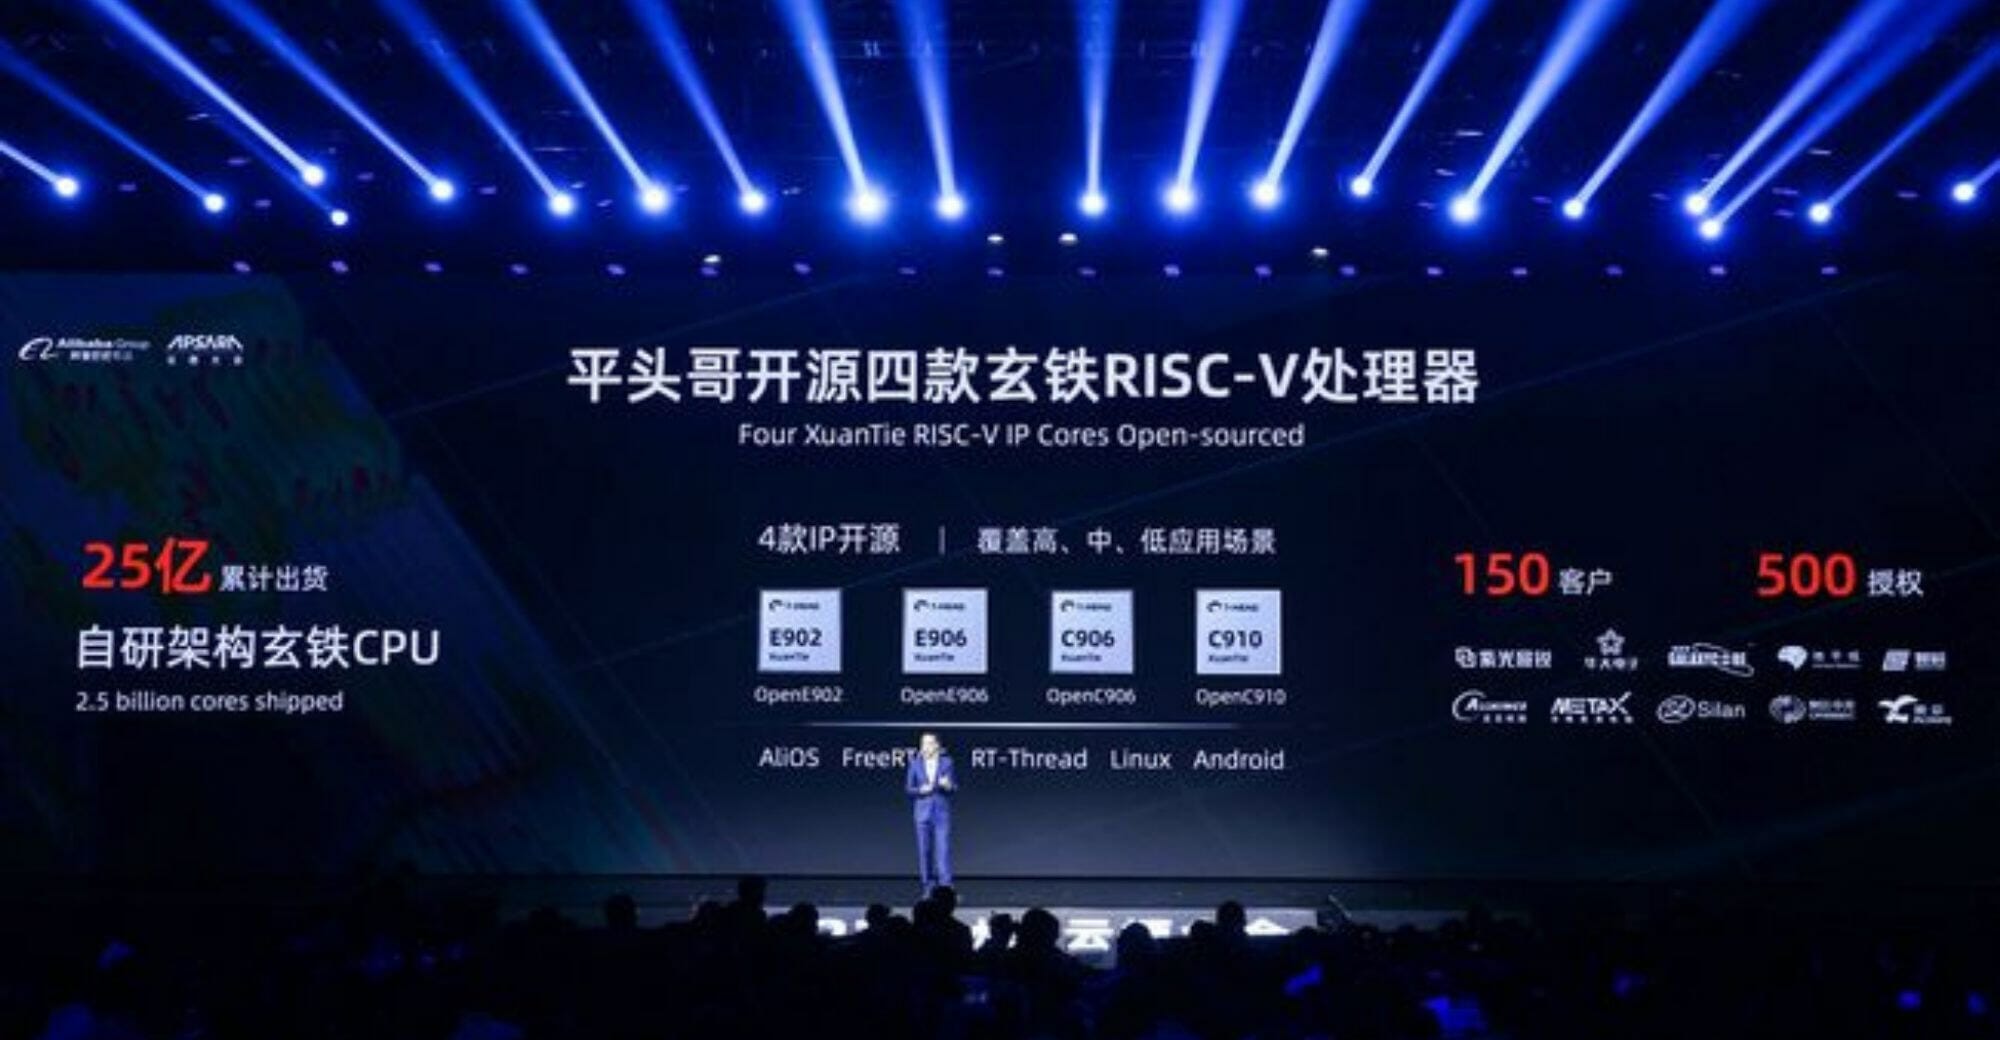 Alibaba open source RISC-V cores